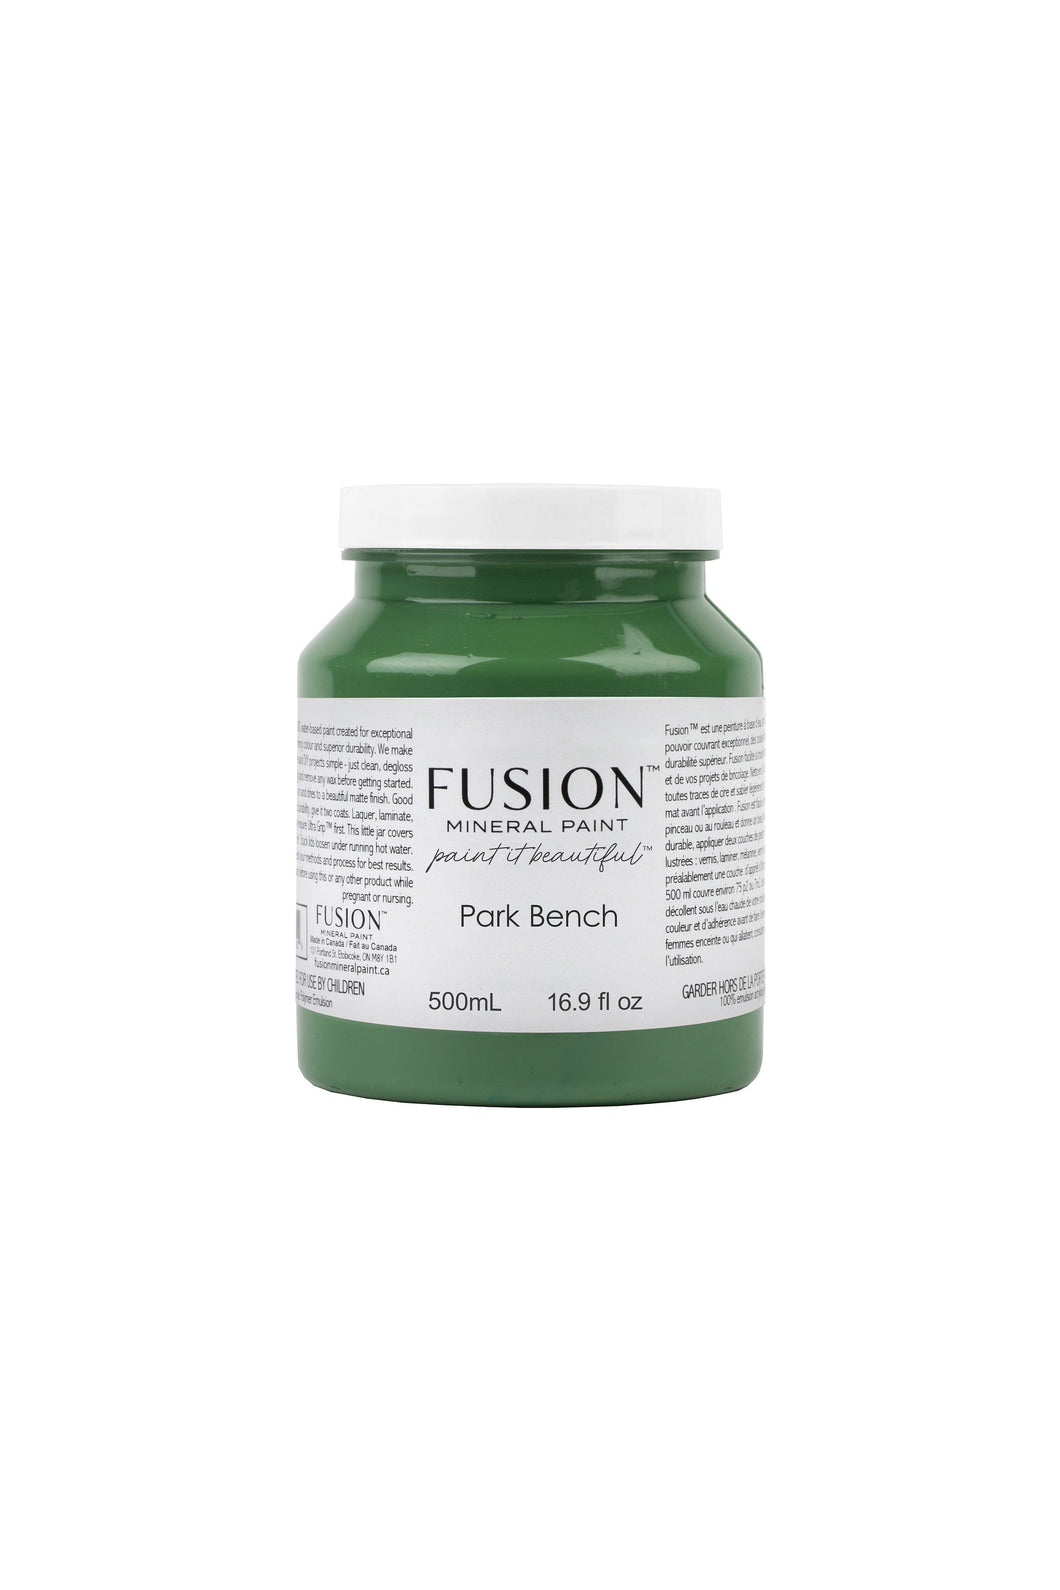 Fusion Mineral Paint - Park Bench 500 ml Jar